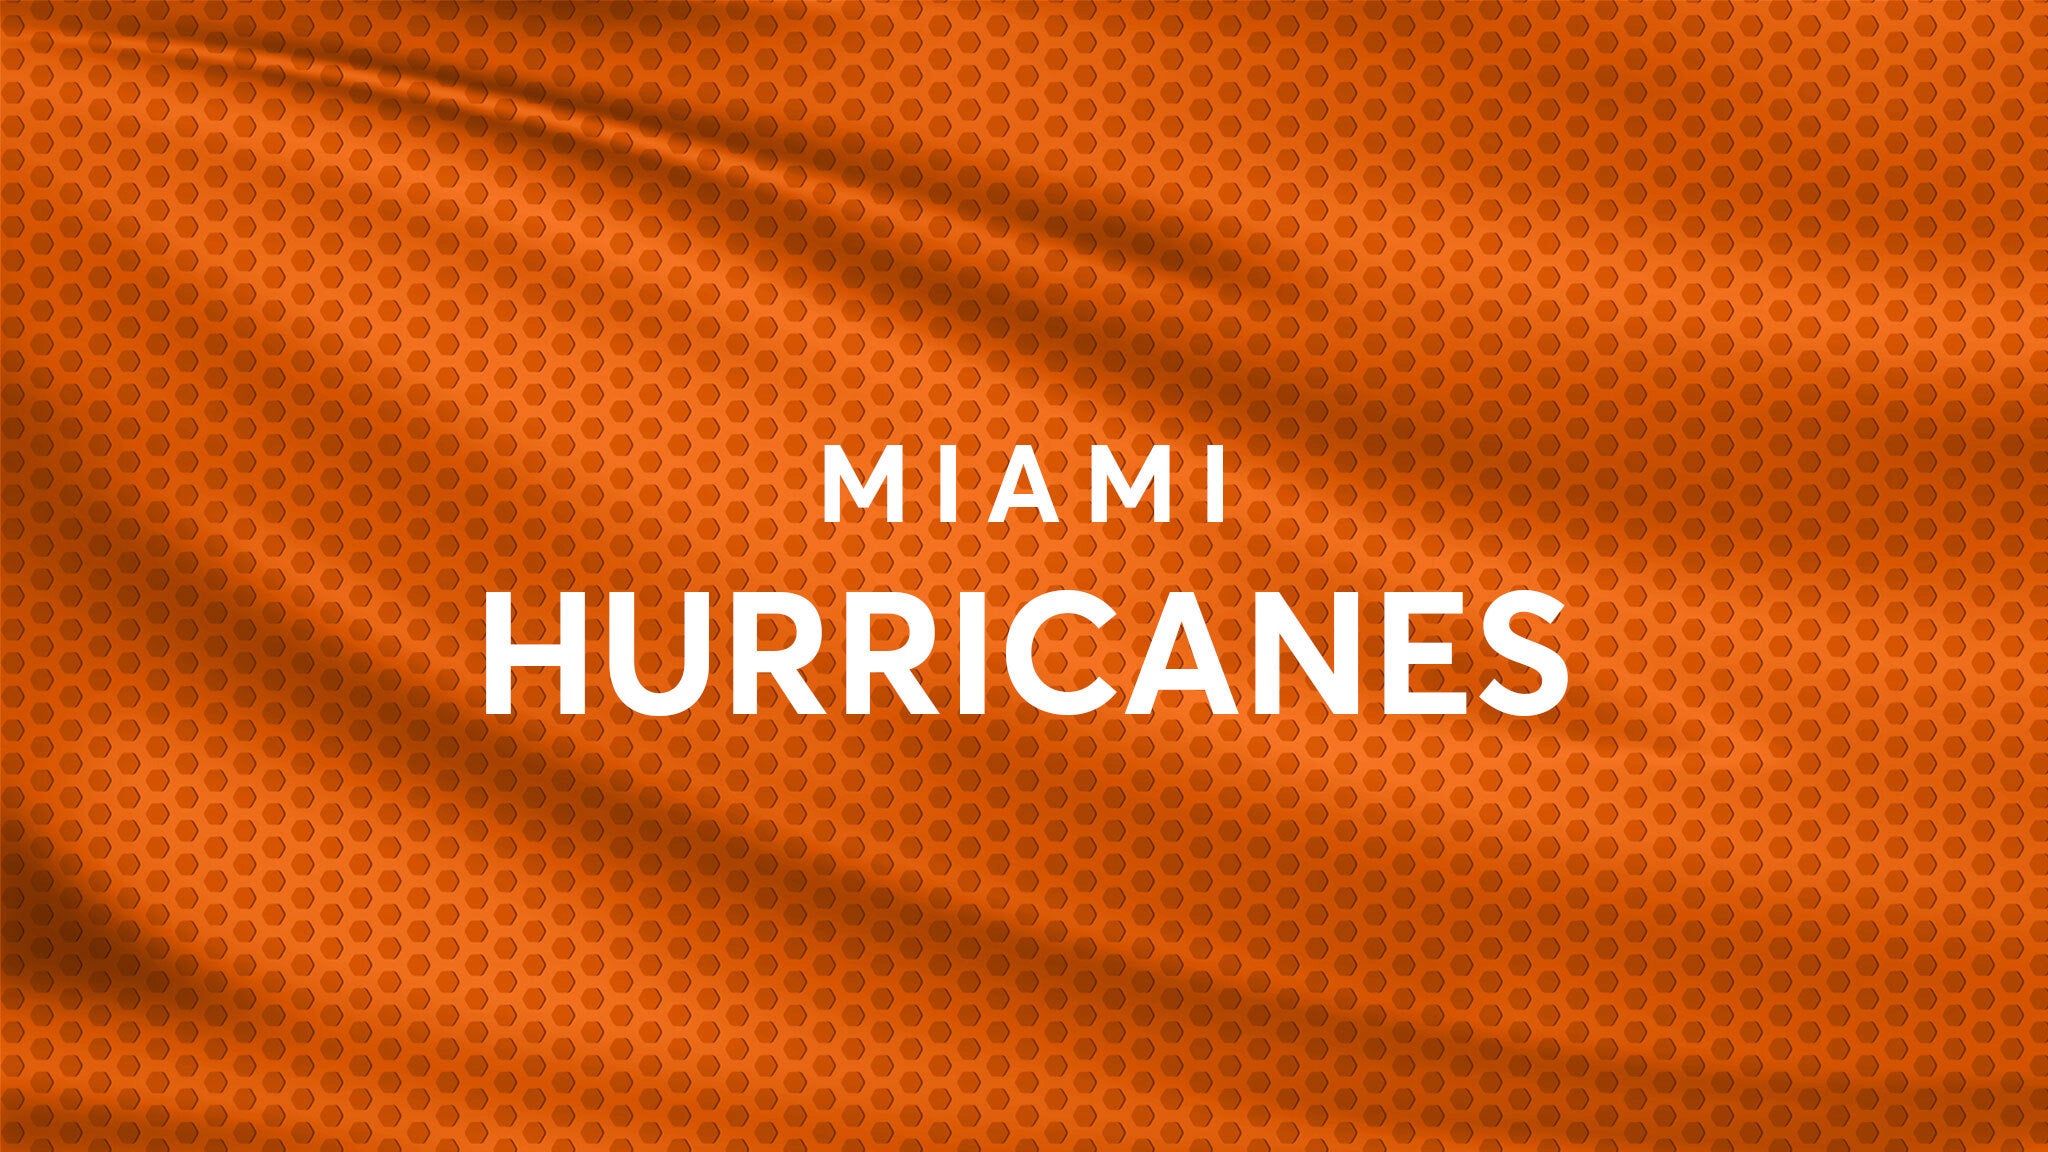 Miami Hurricanes Baseball vs. Clemson Tigers Baseball